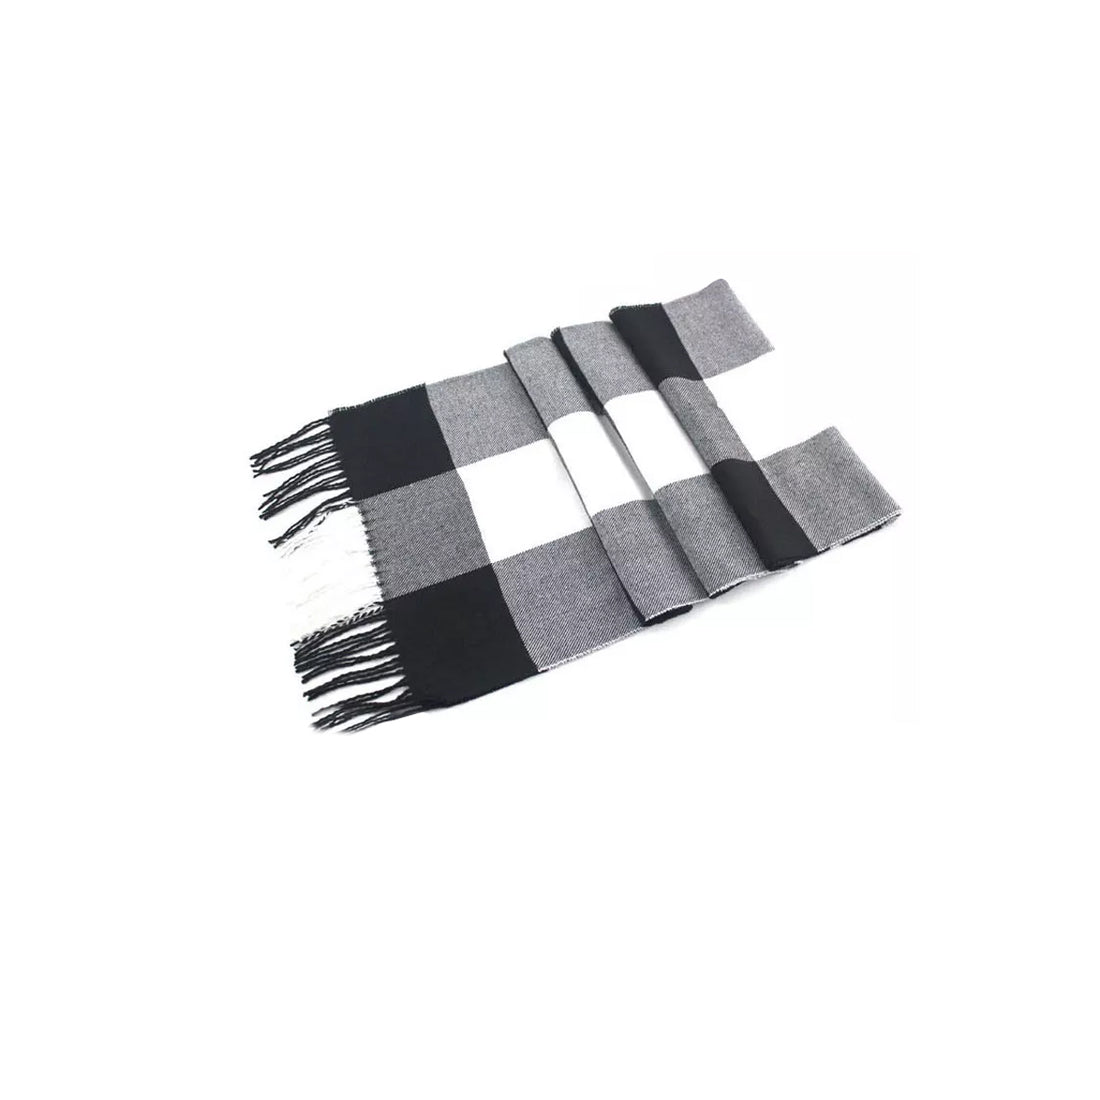 Soft Tartan Plaid Blanket Scarf - Black/White, Grey or Multi Color